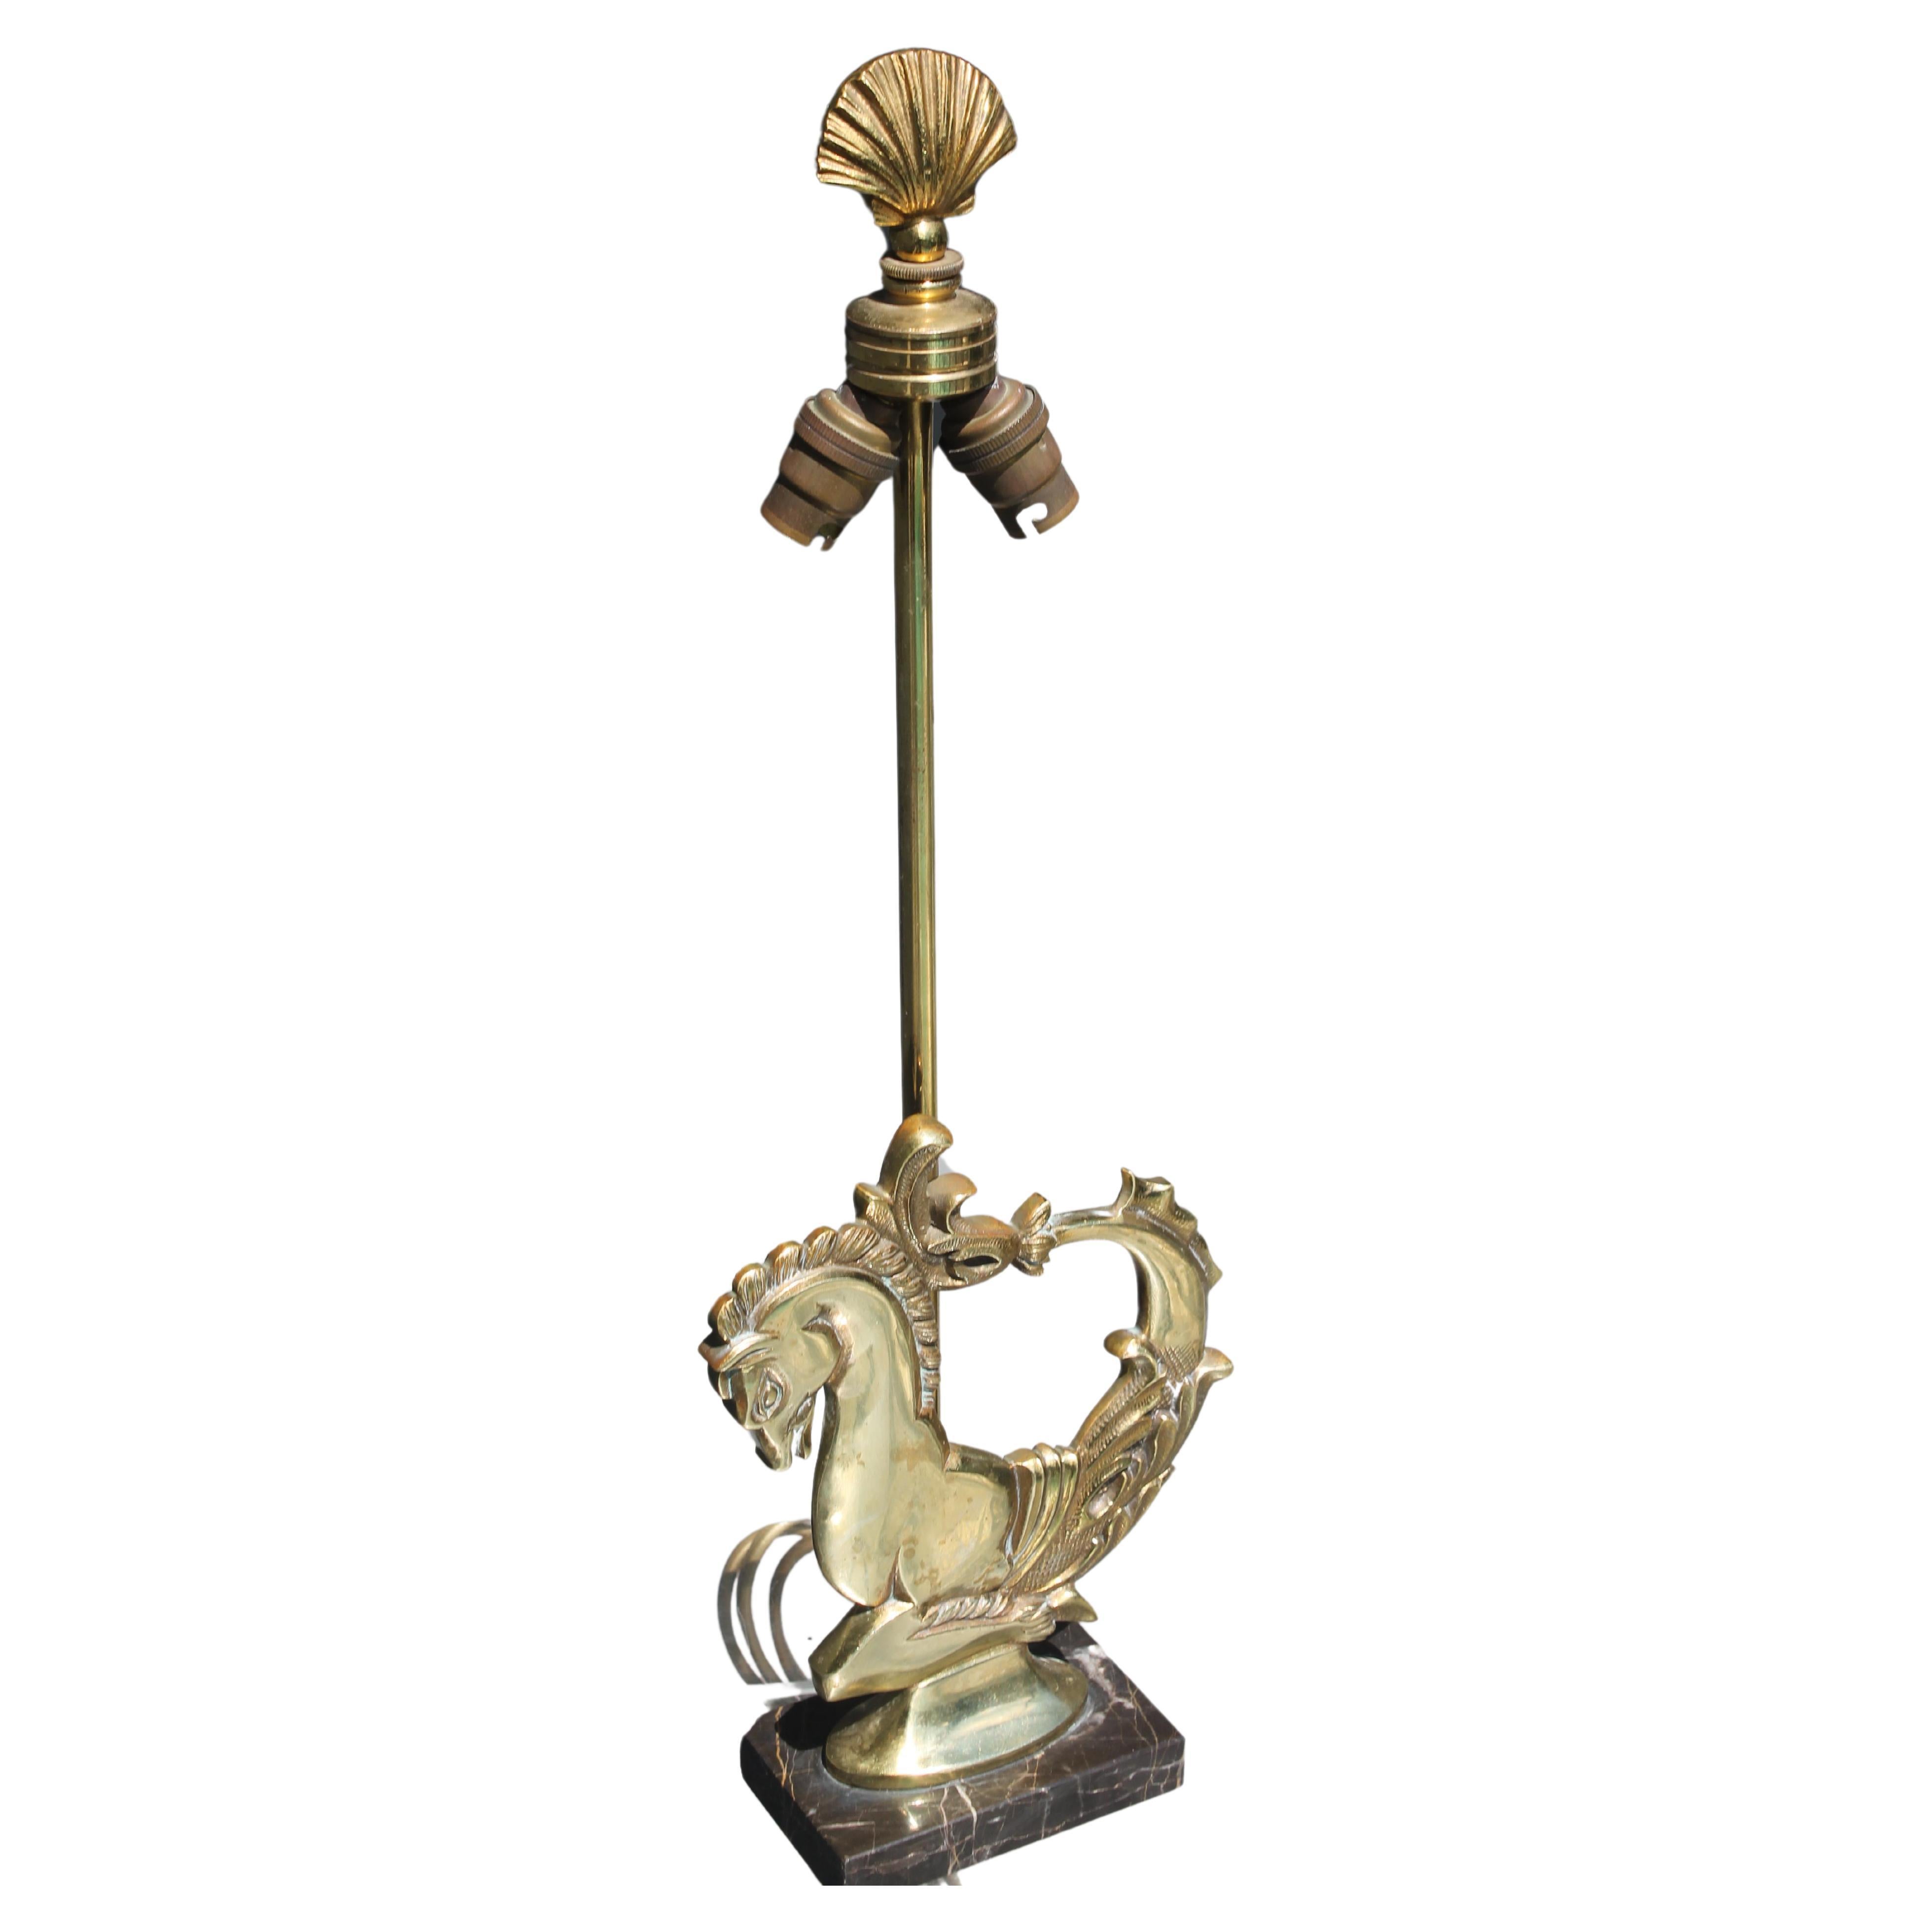 1920's French Art Deco Gilt Bronze Seahorse Table Lamp Attrib. Maison Charles